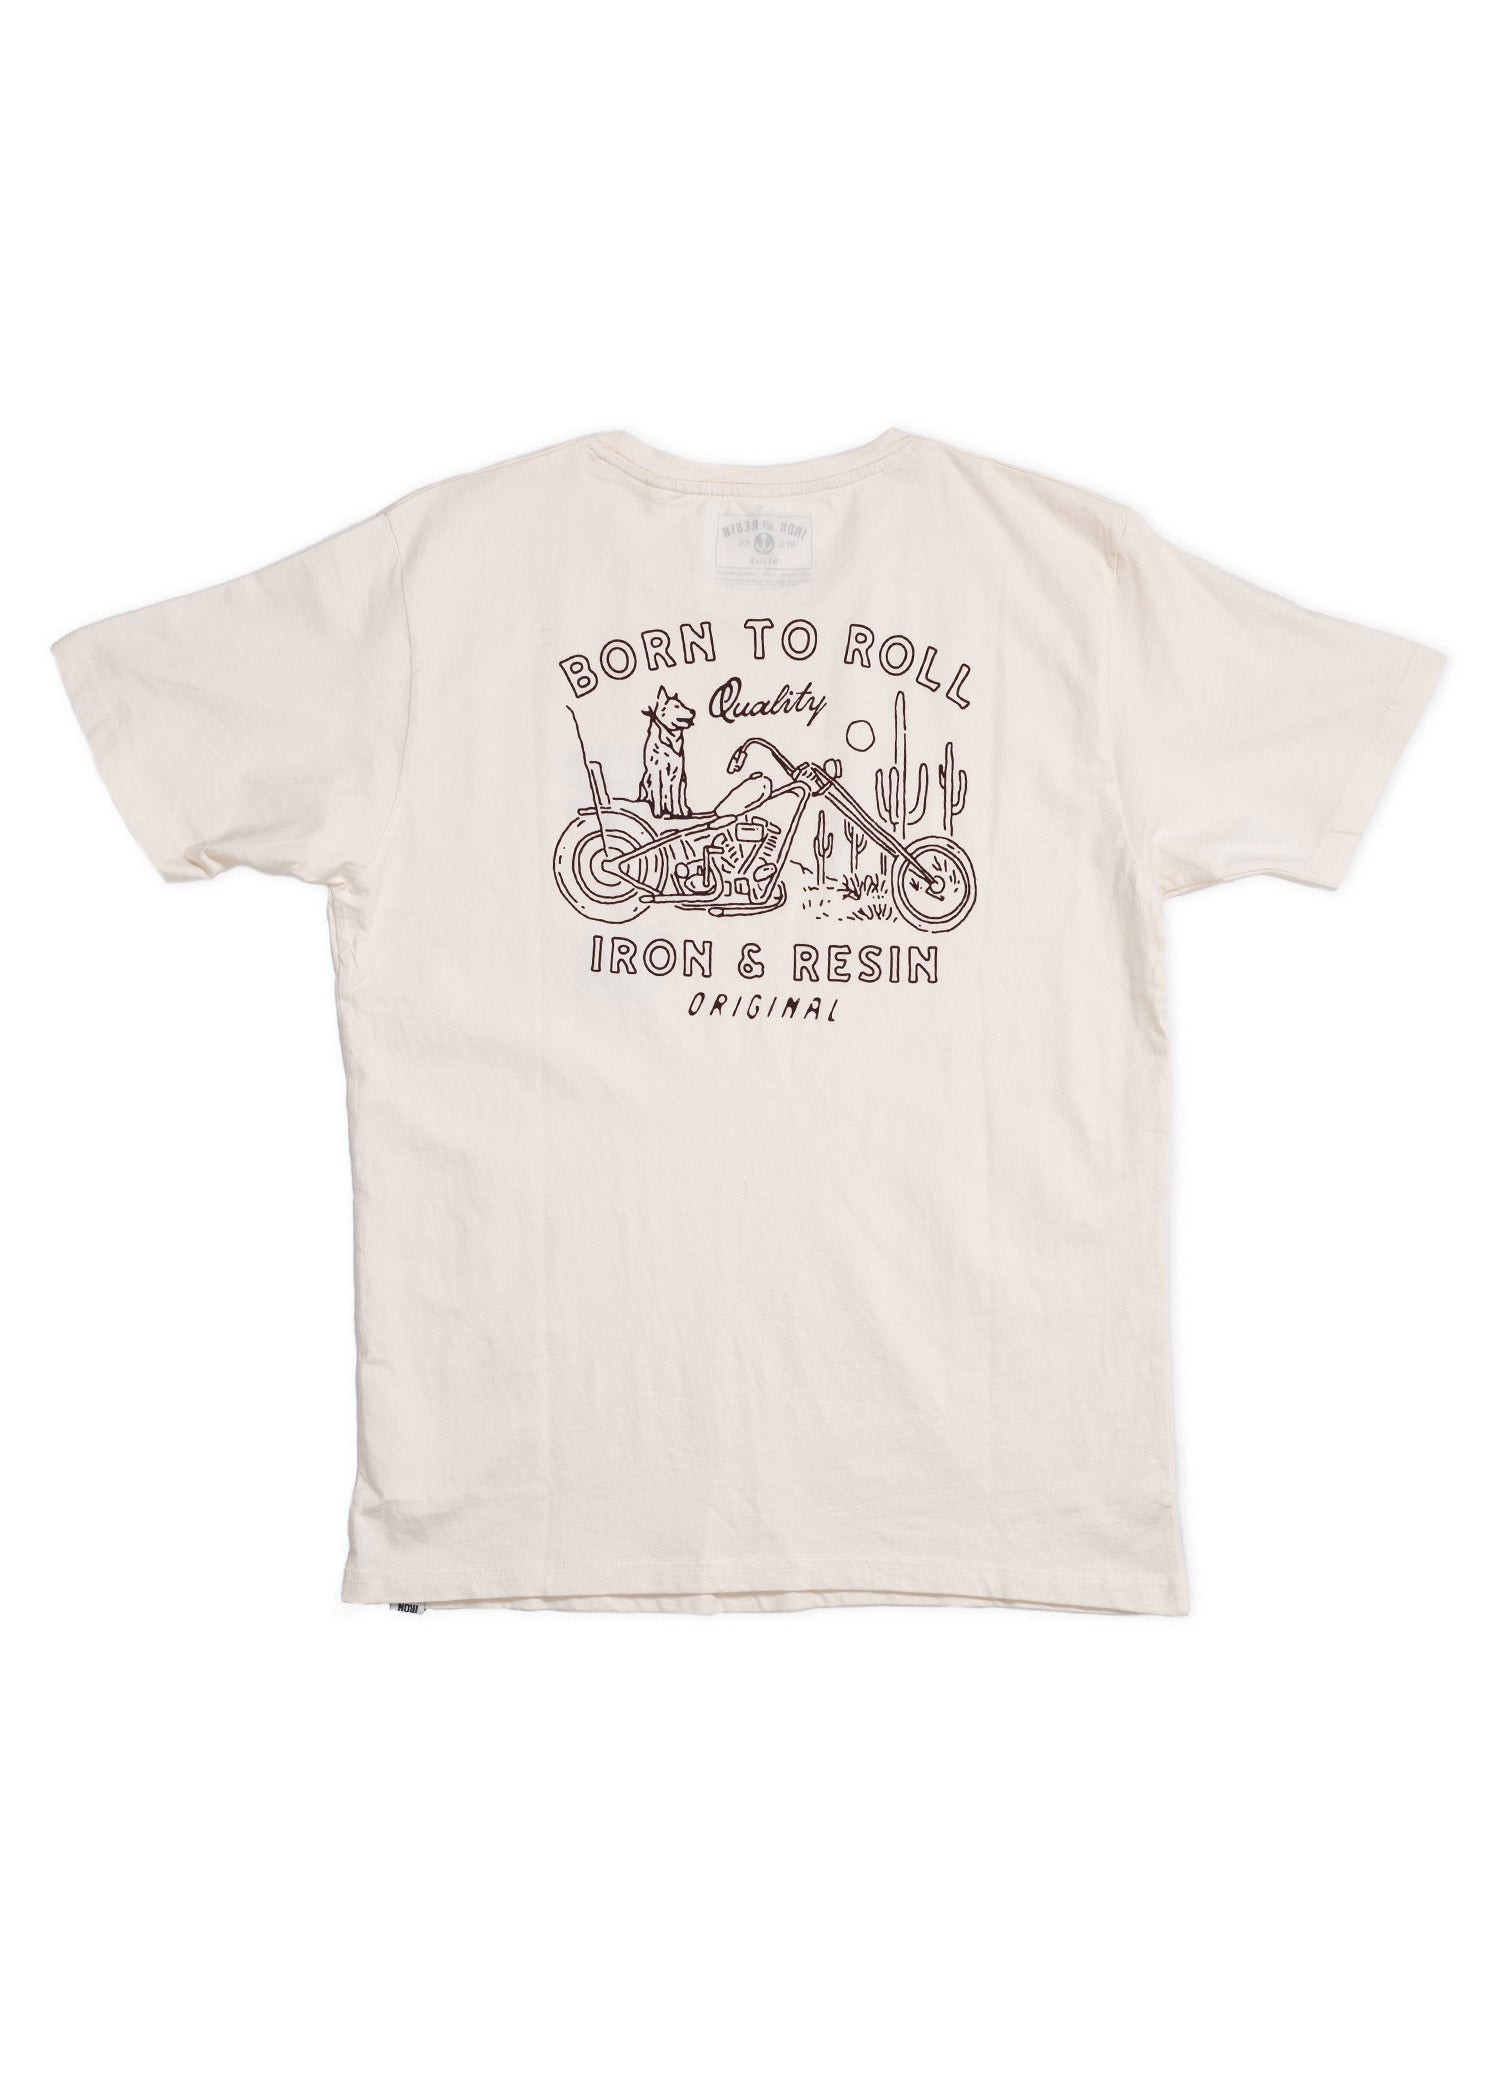 Chop dog - T-shirt textile homme - IRON & RESIN